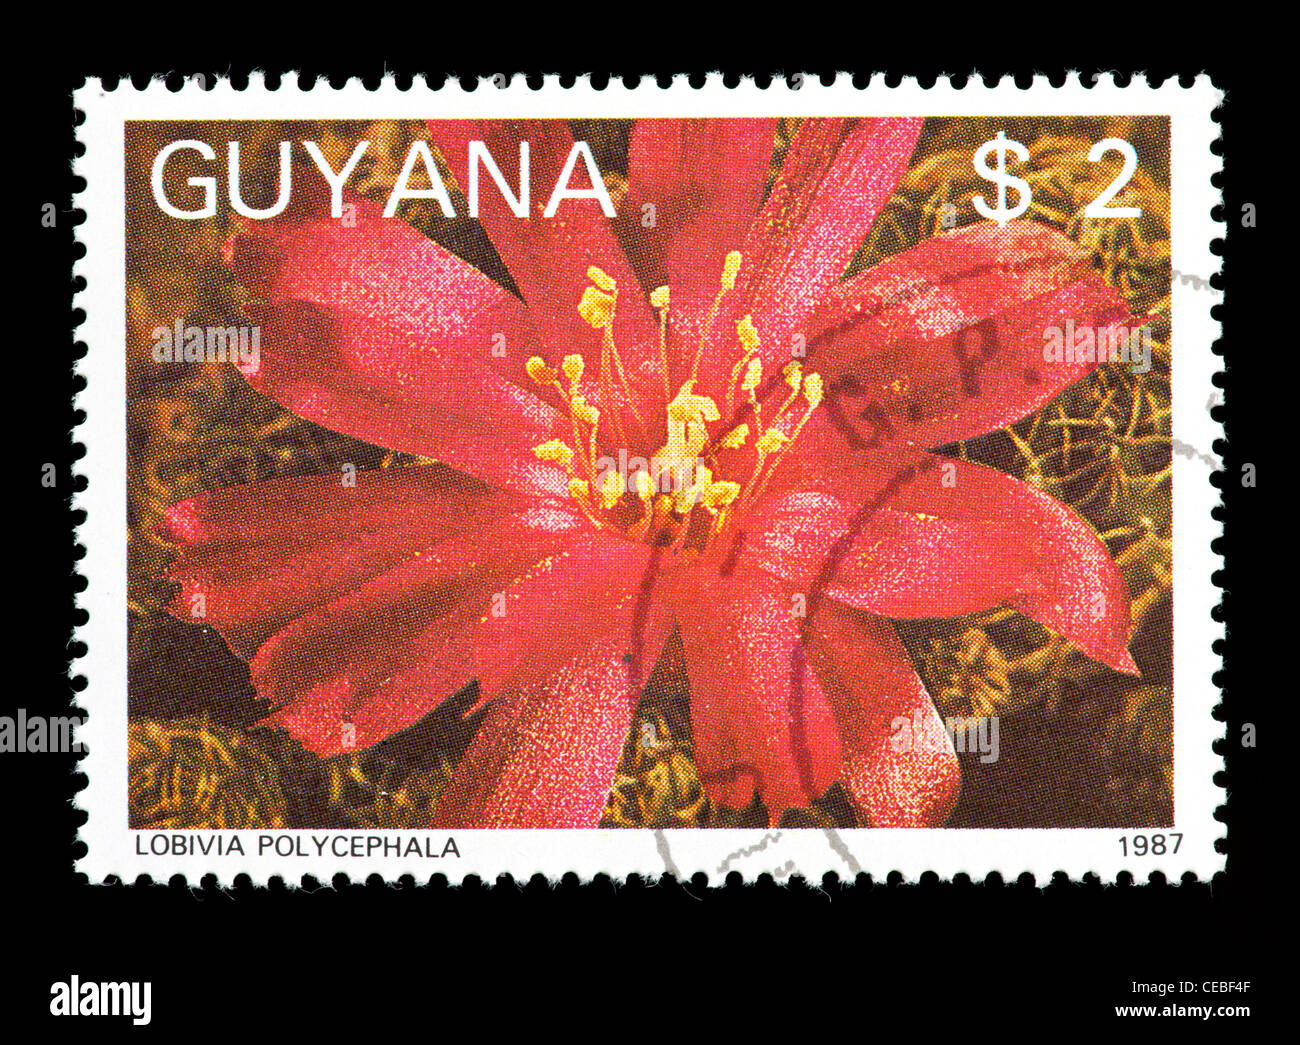 Postage stamp from Guyana depicting a cactus flower (Lobivia polycephala) Stock Photo